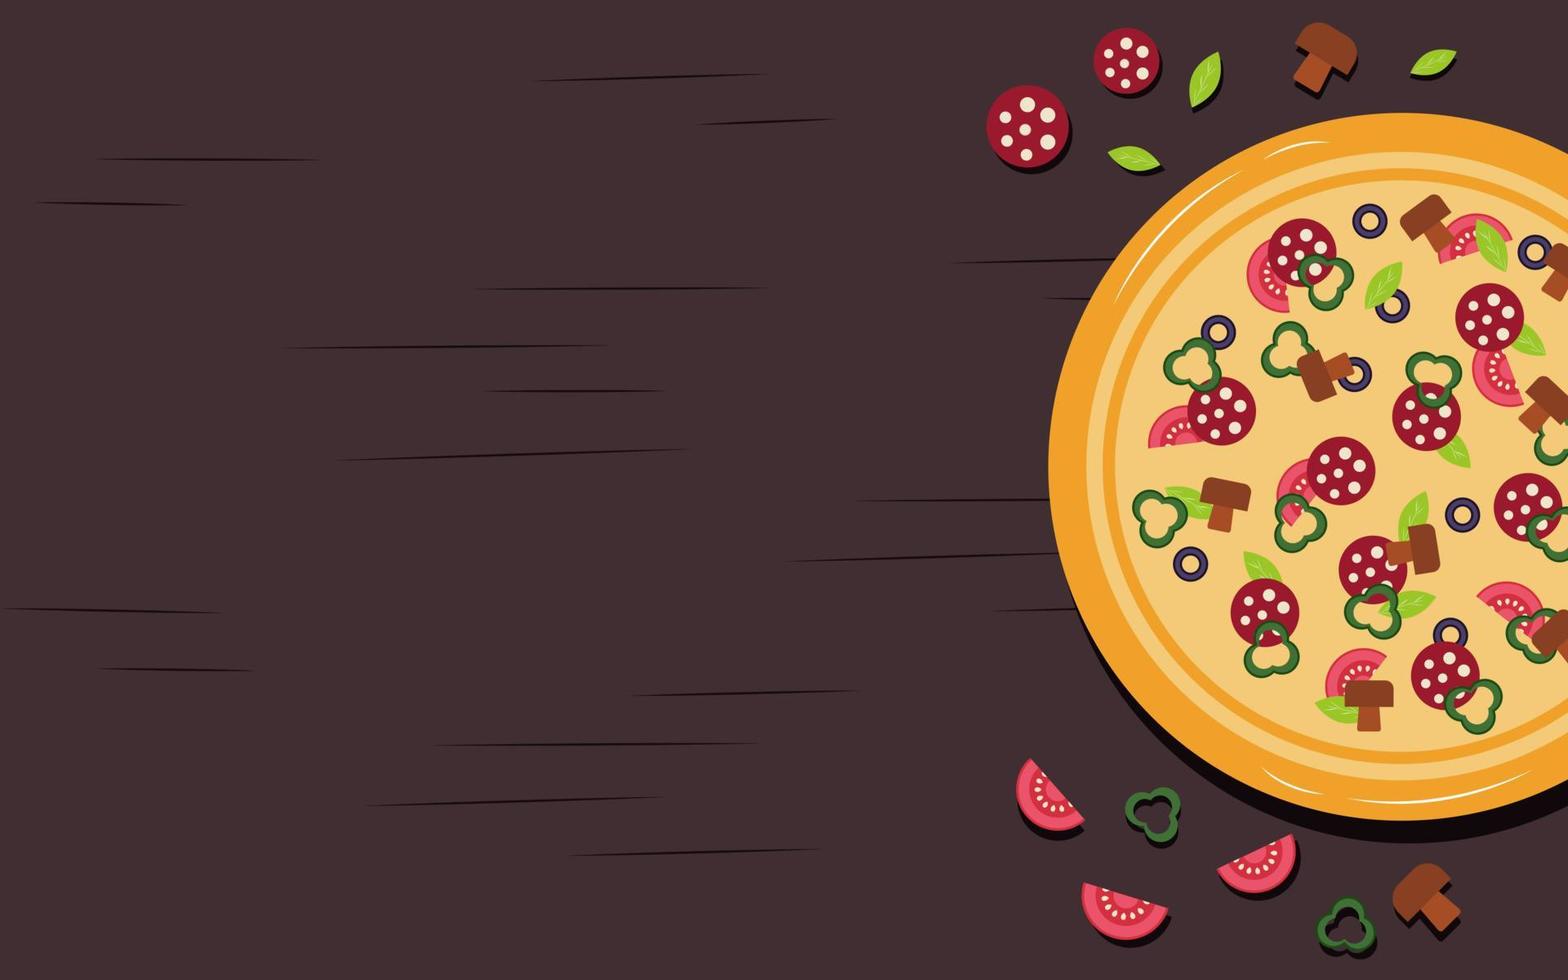 Pizza banner or background. Vector illustration.